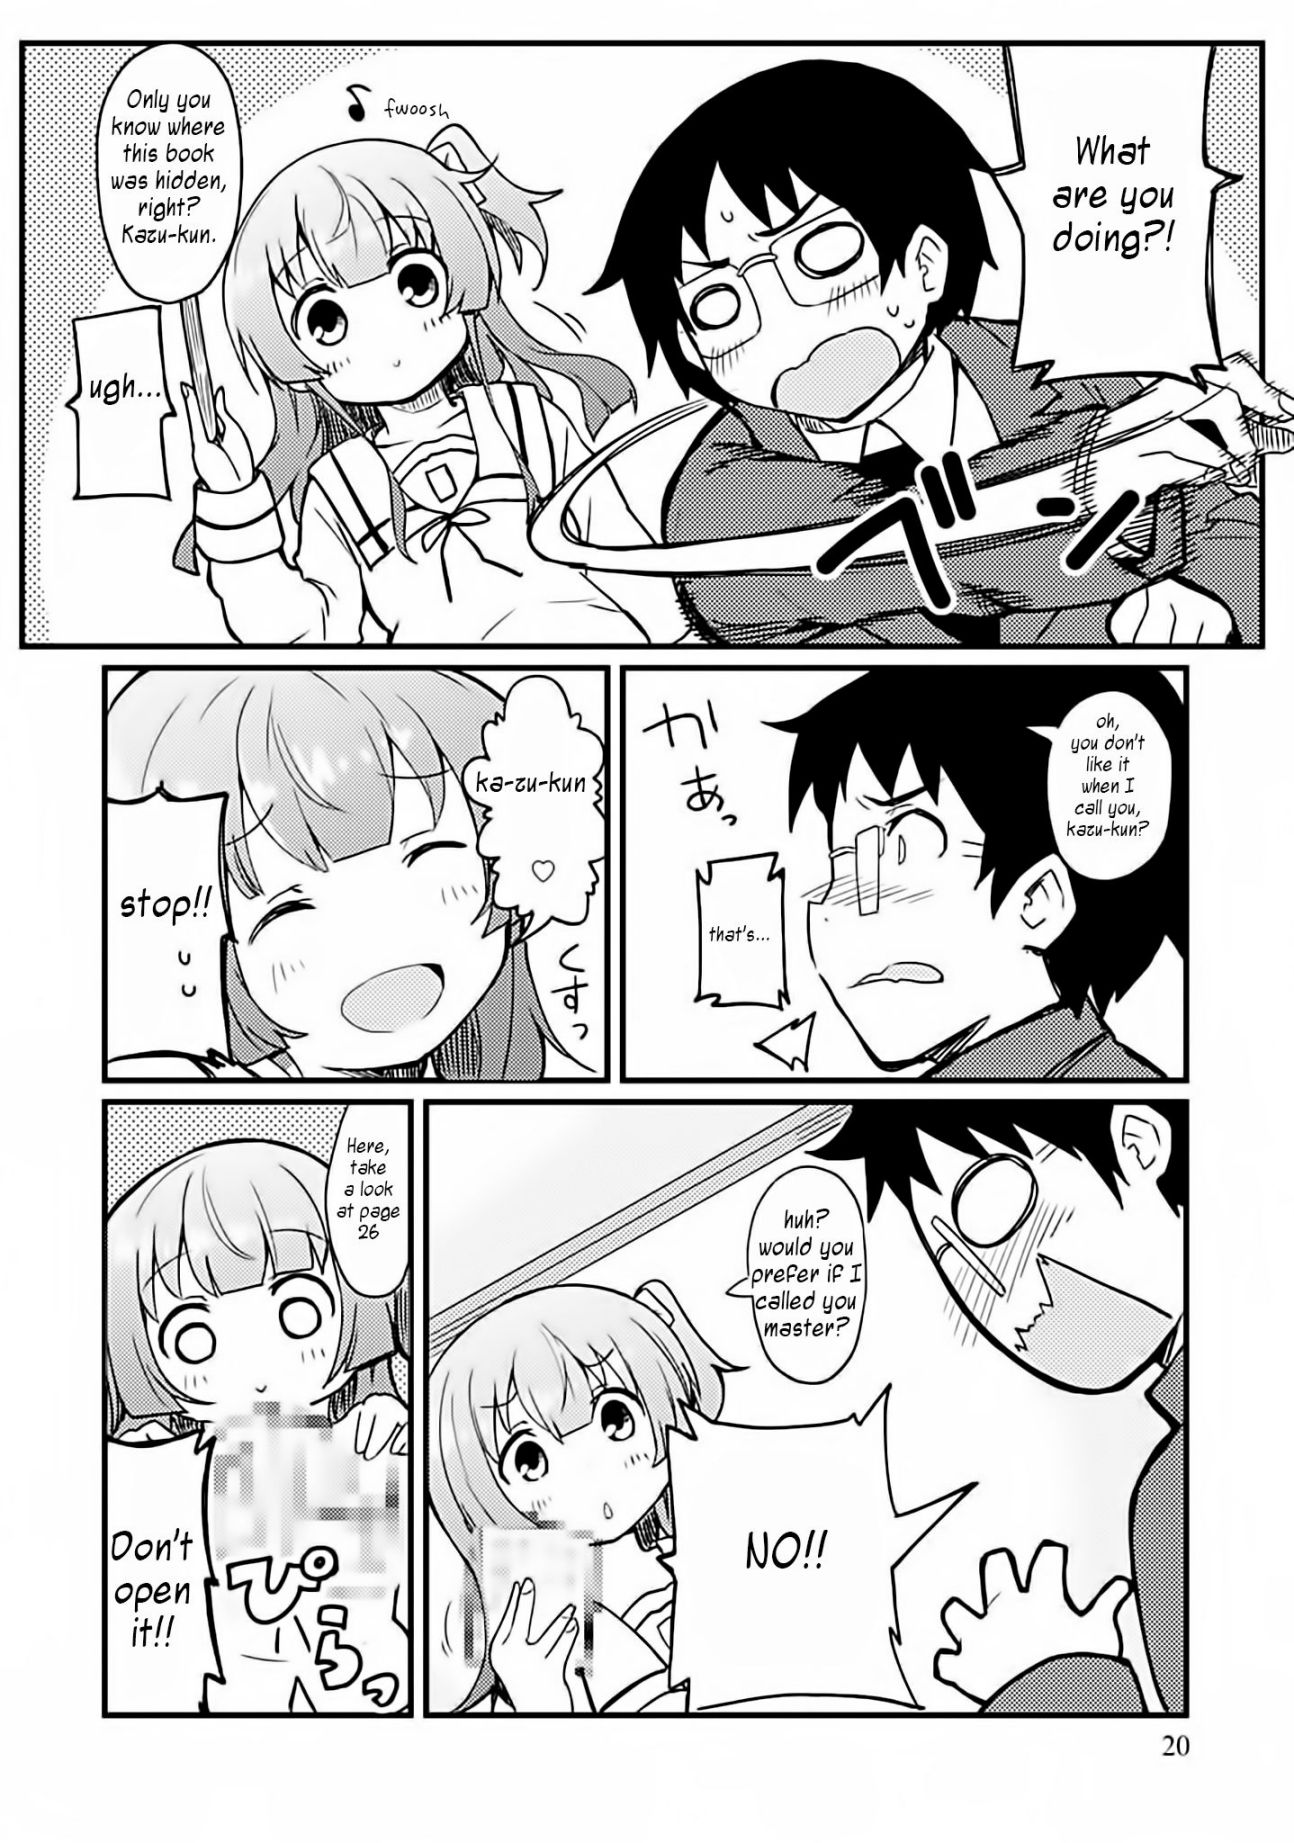 read manga online